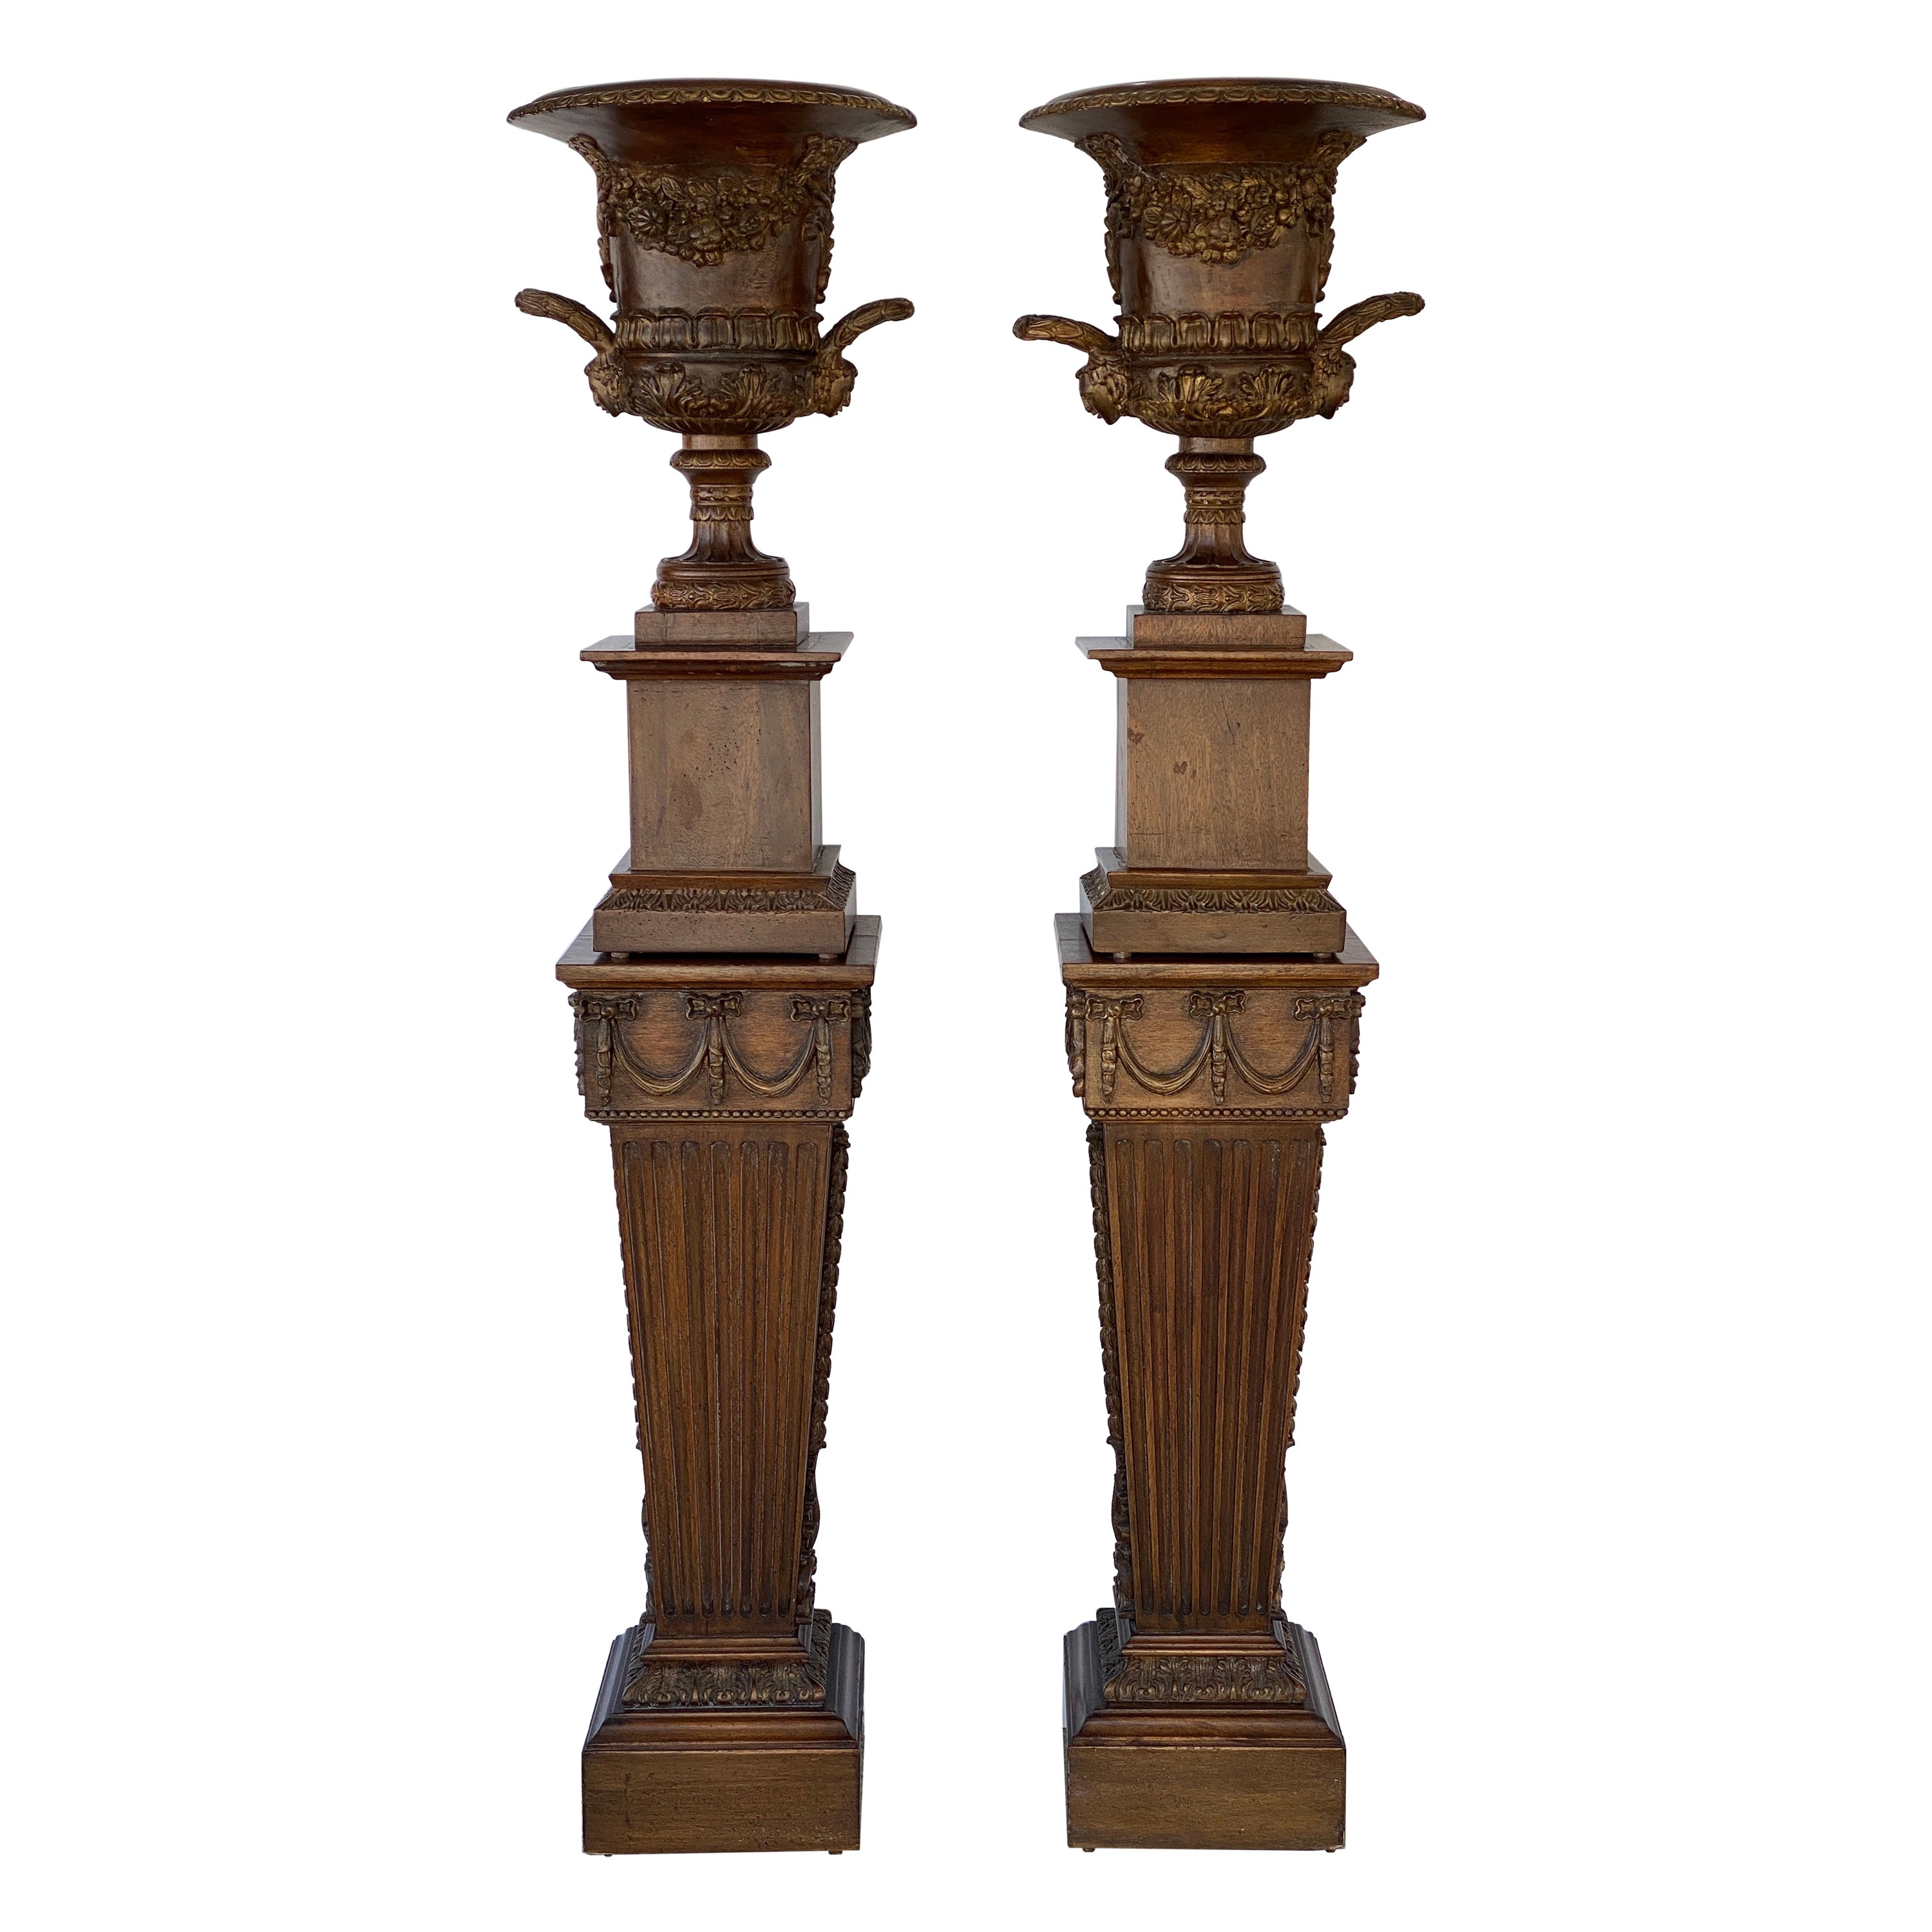 Pair of Louis XVI Style Campana Urns on Pedestals